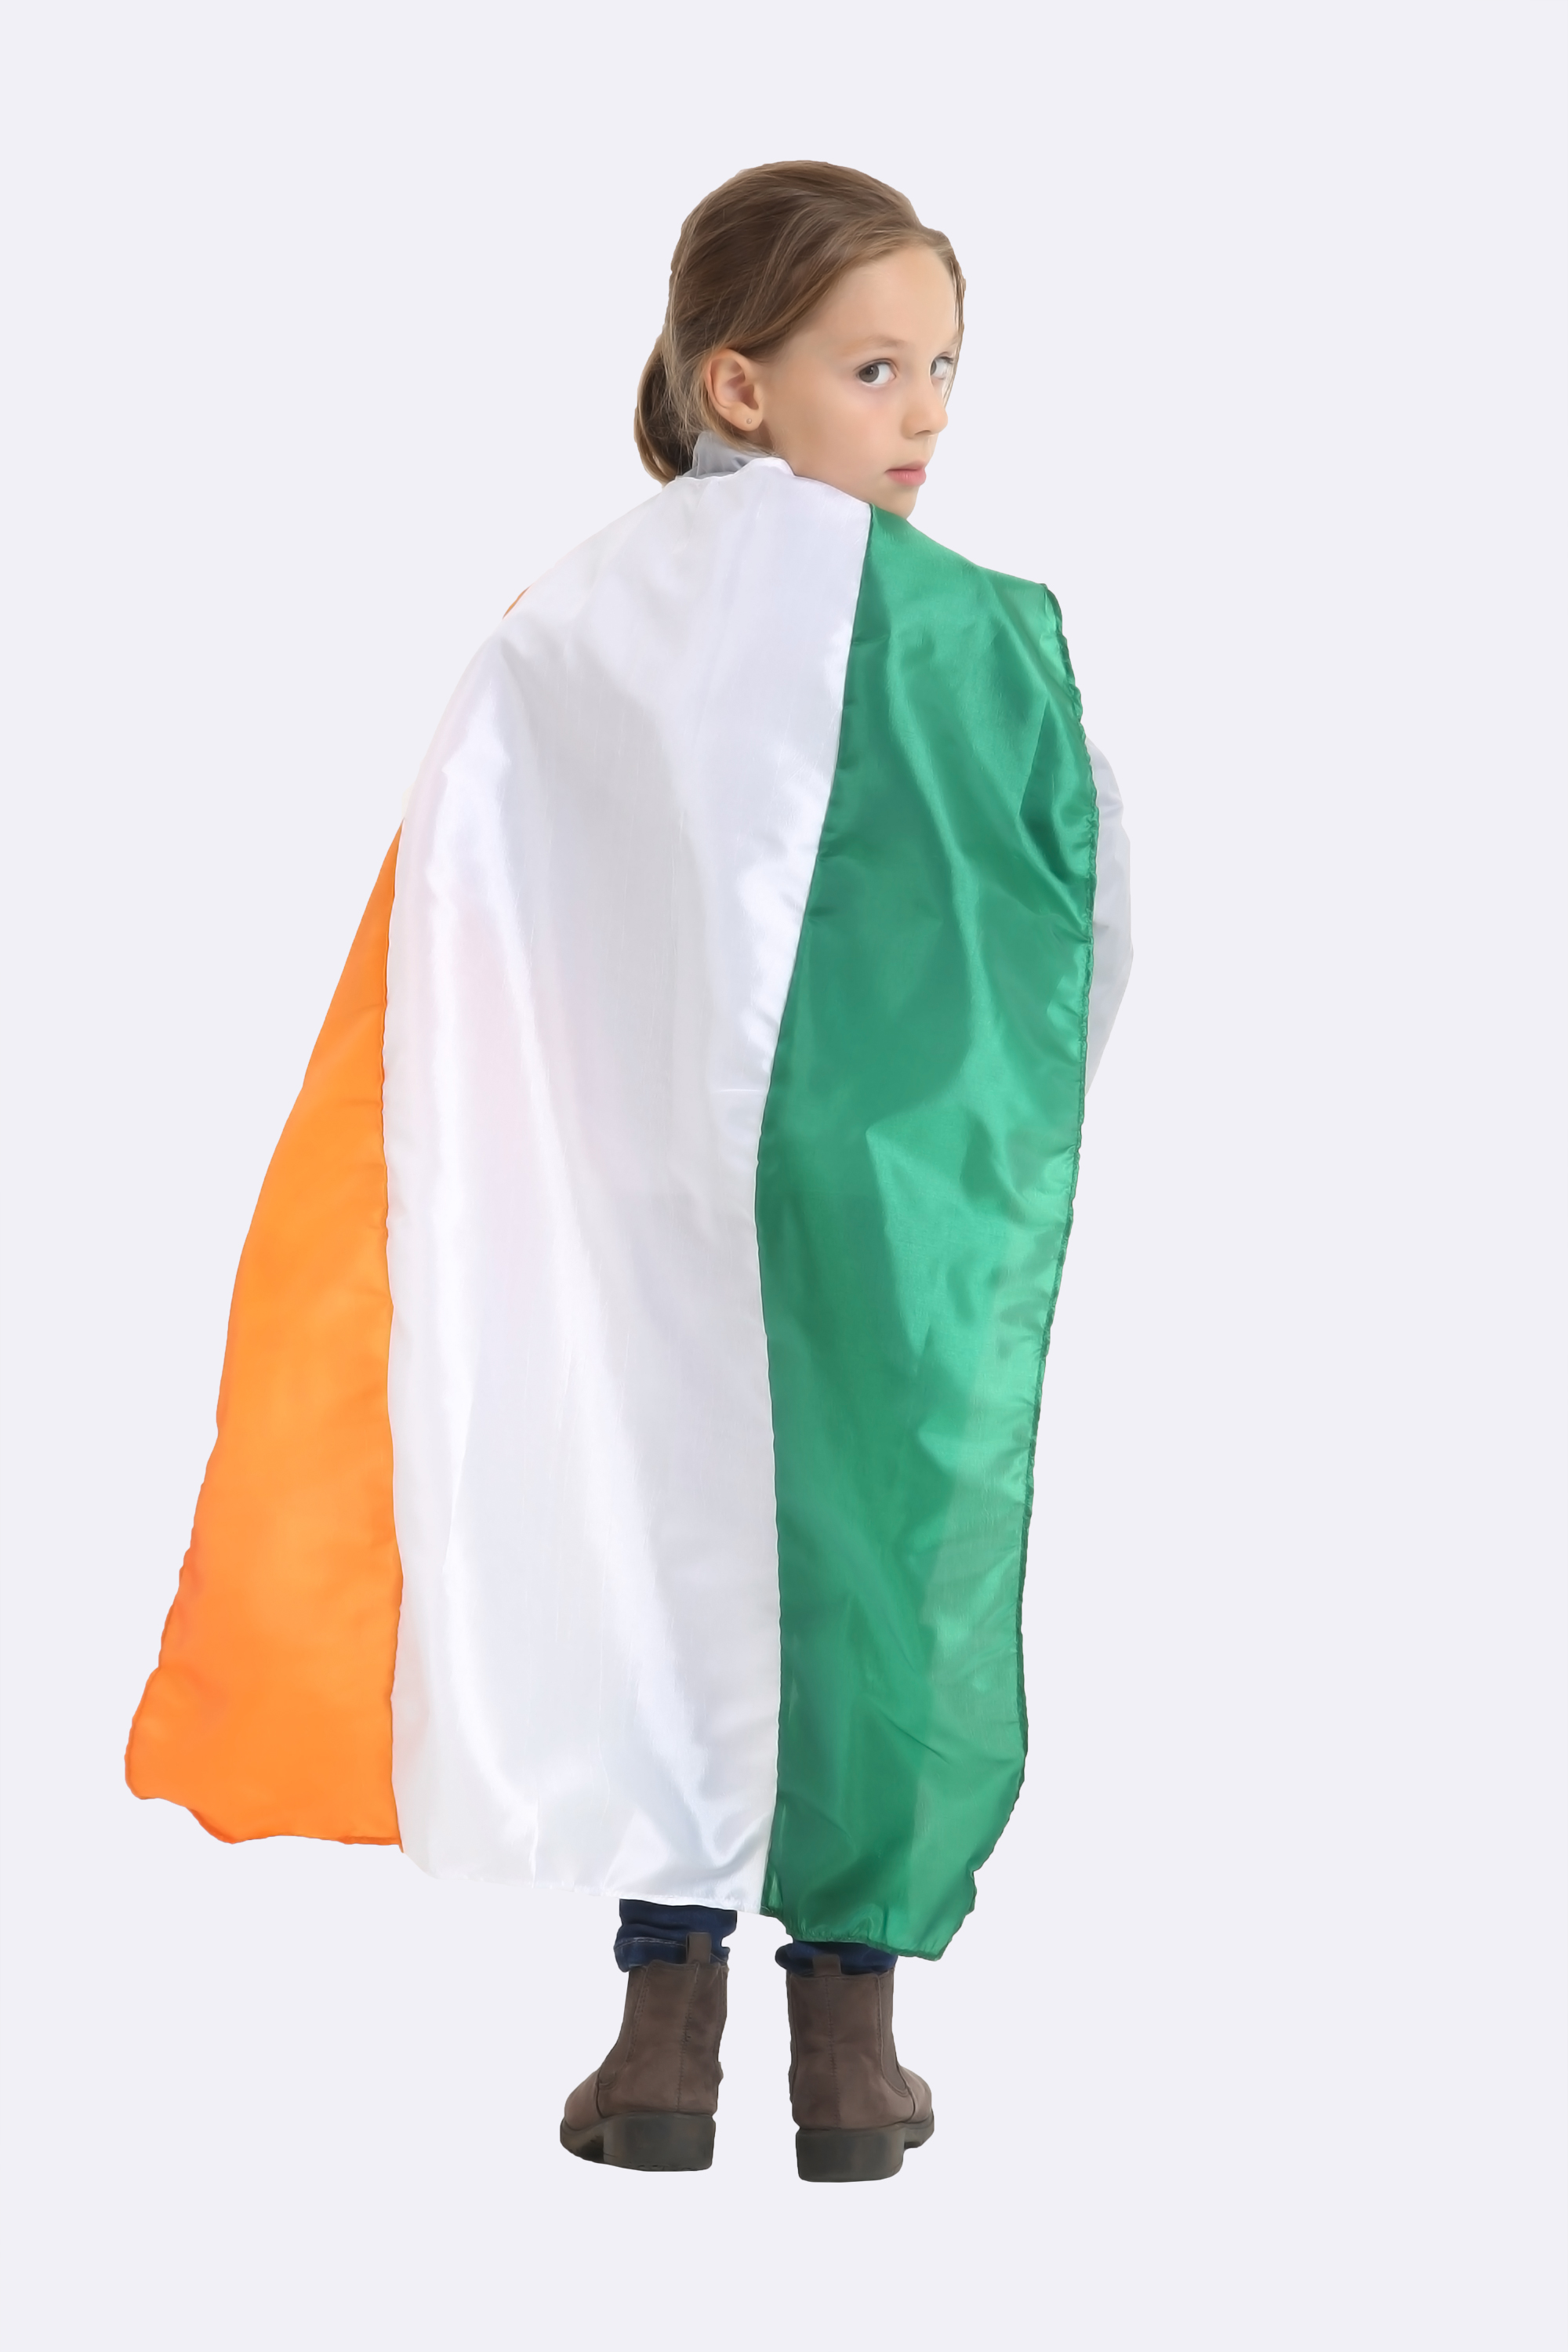 Wickedfun Children's Irish Flag Satin Cape